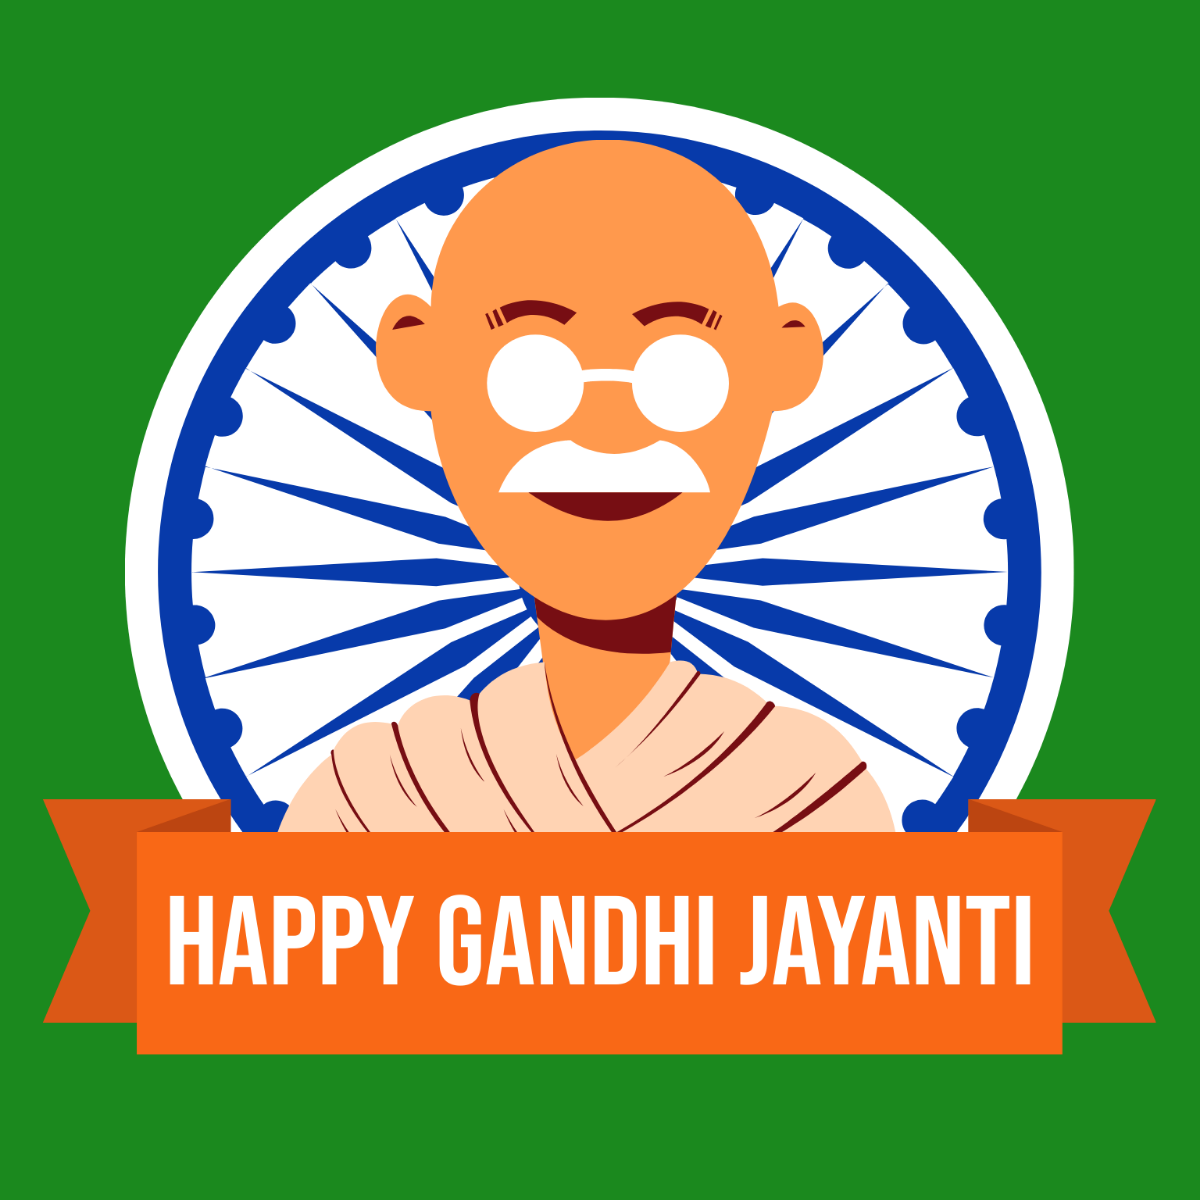 Gandhi Jayanti wishes template in Hindi typography